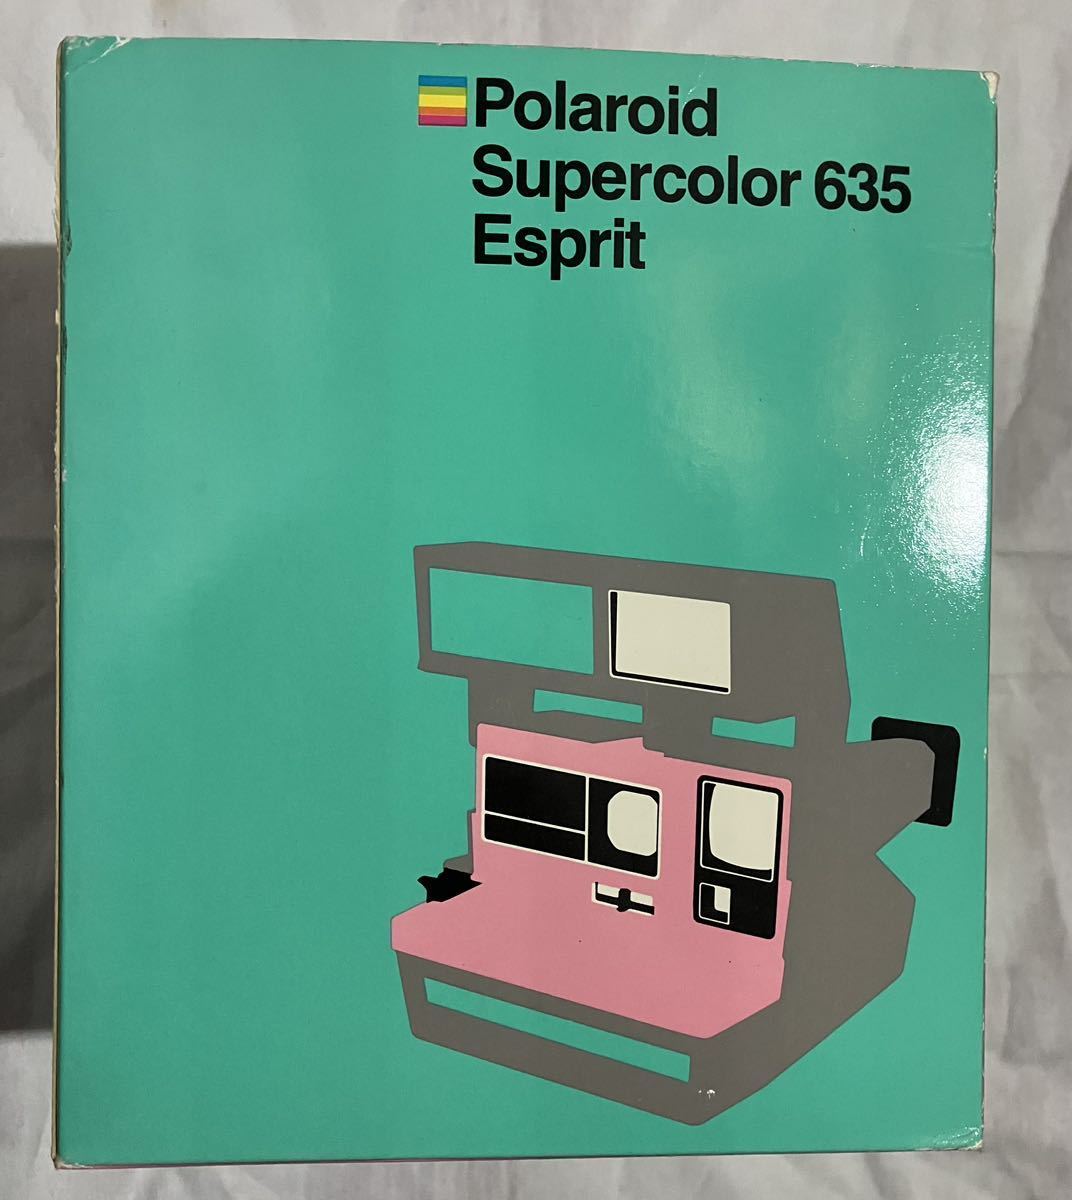 Polaroid Supercolor 635 Esprit ポラロイド スーパーカラー635